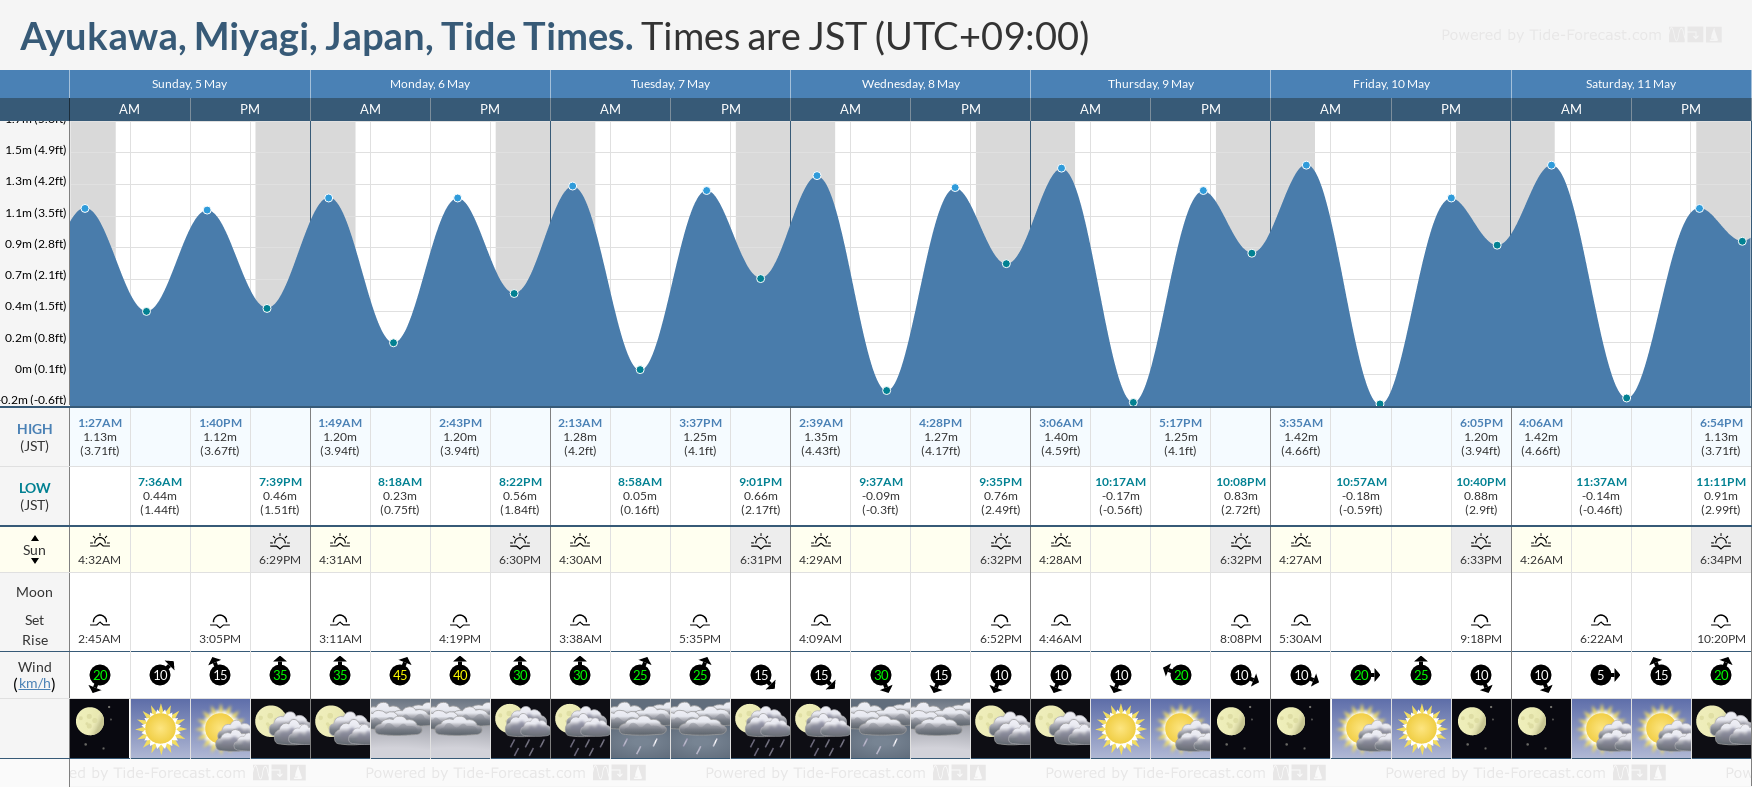 Ayukawa, Miyagi, Japan Tide Chart including high and low tide tide times for the next 7 days